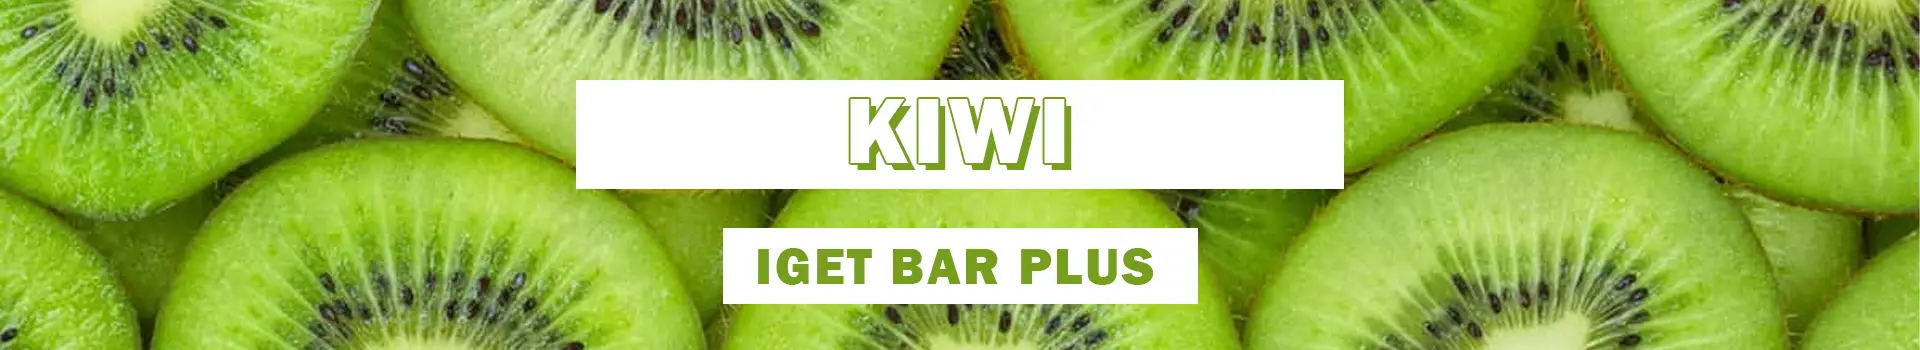 kiwi iget bar plus flavours